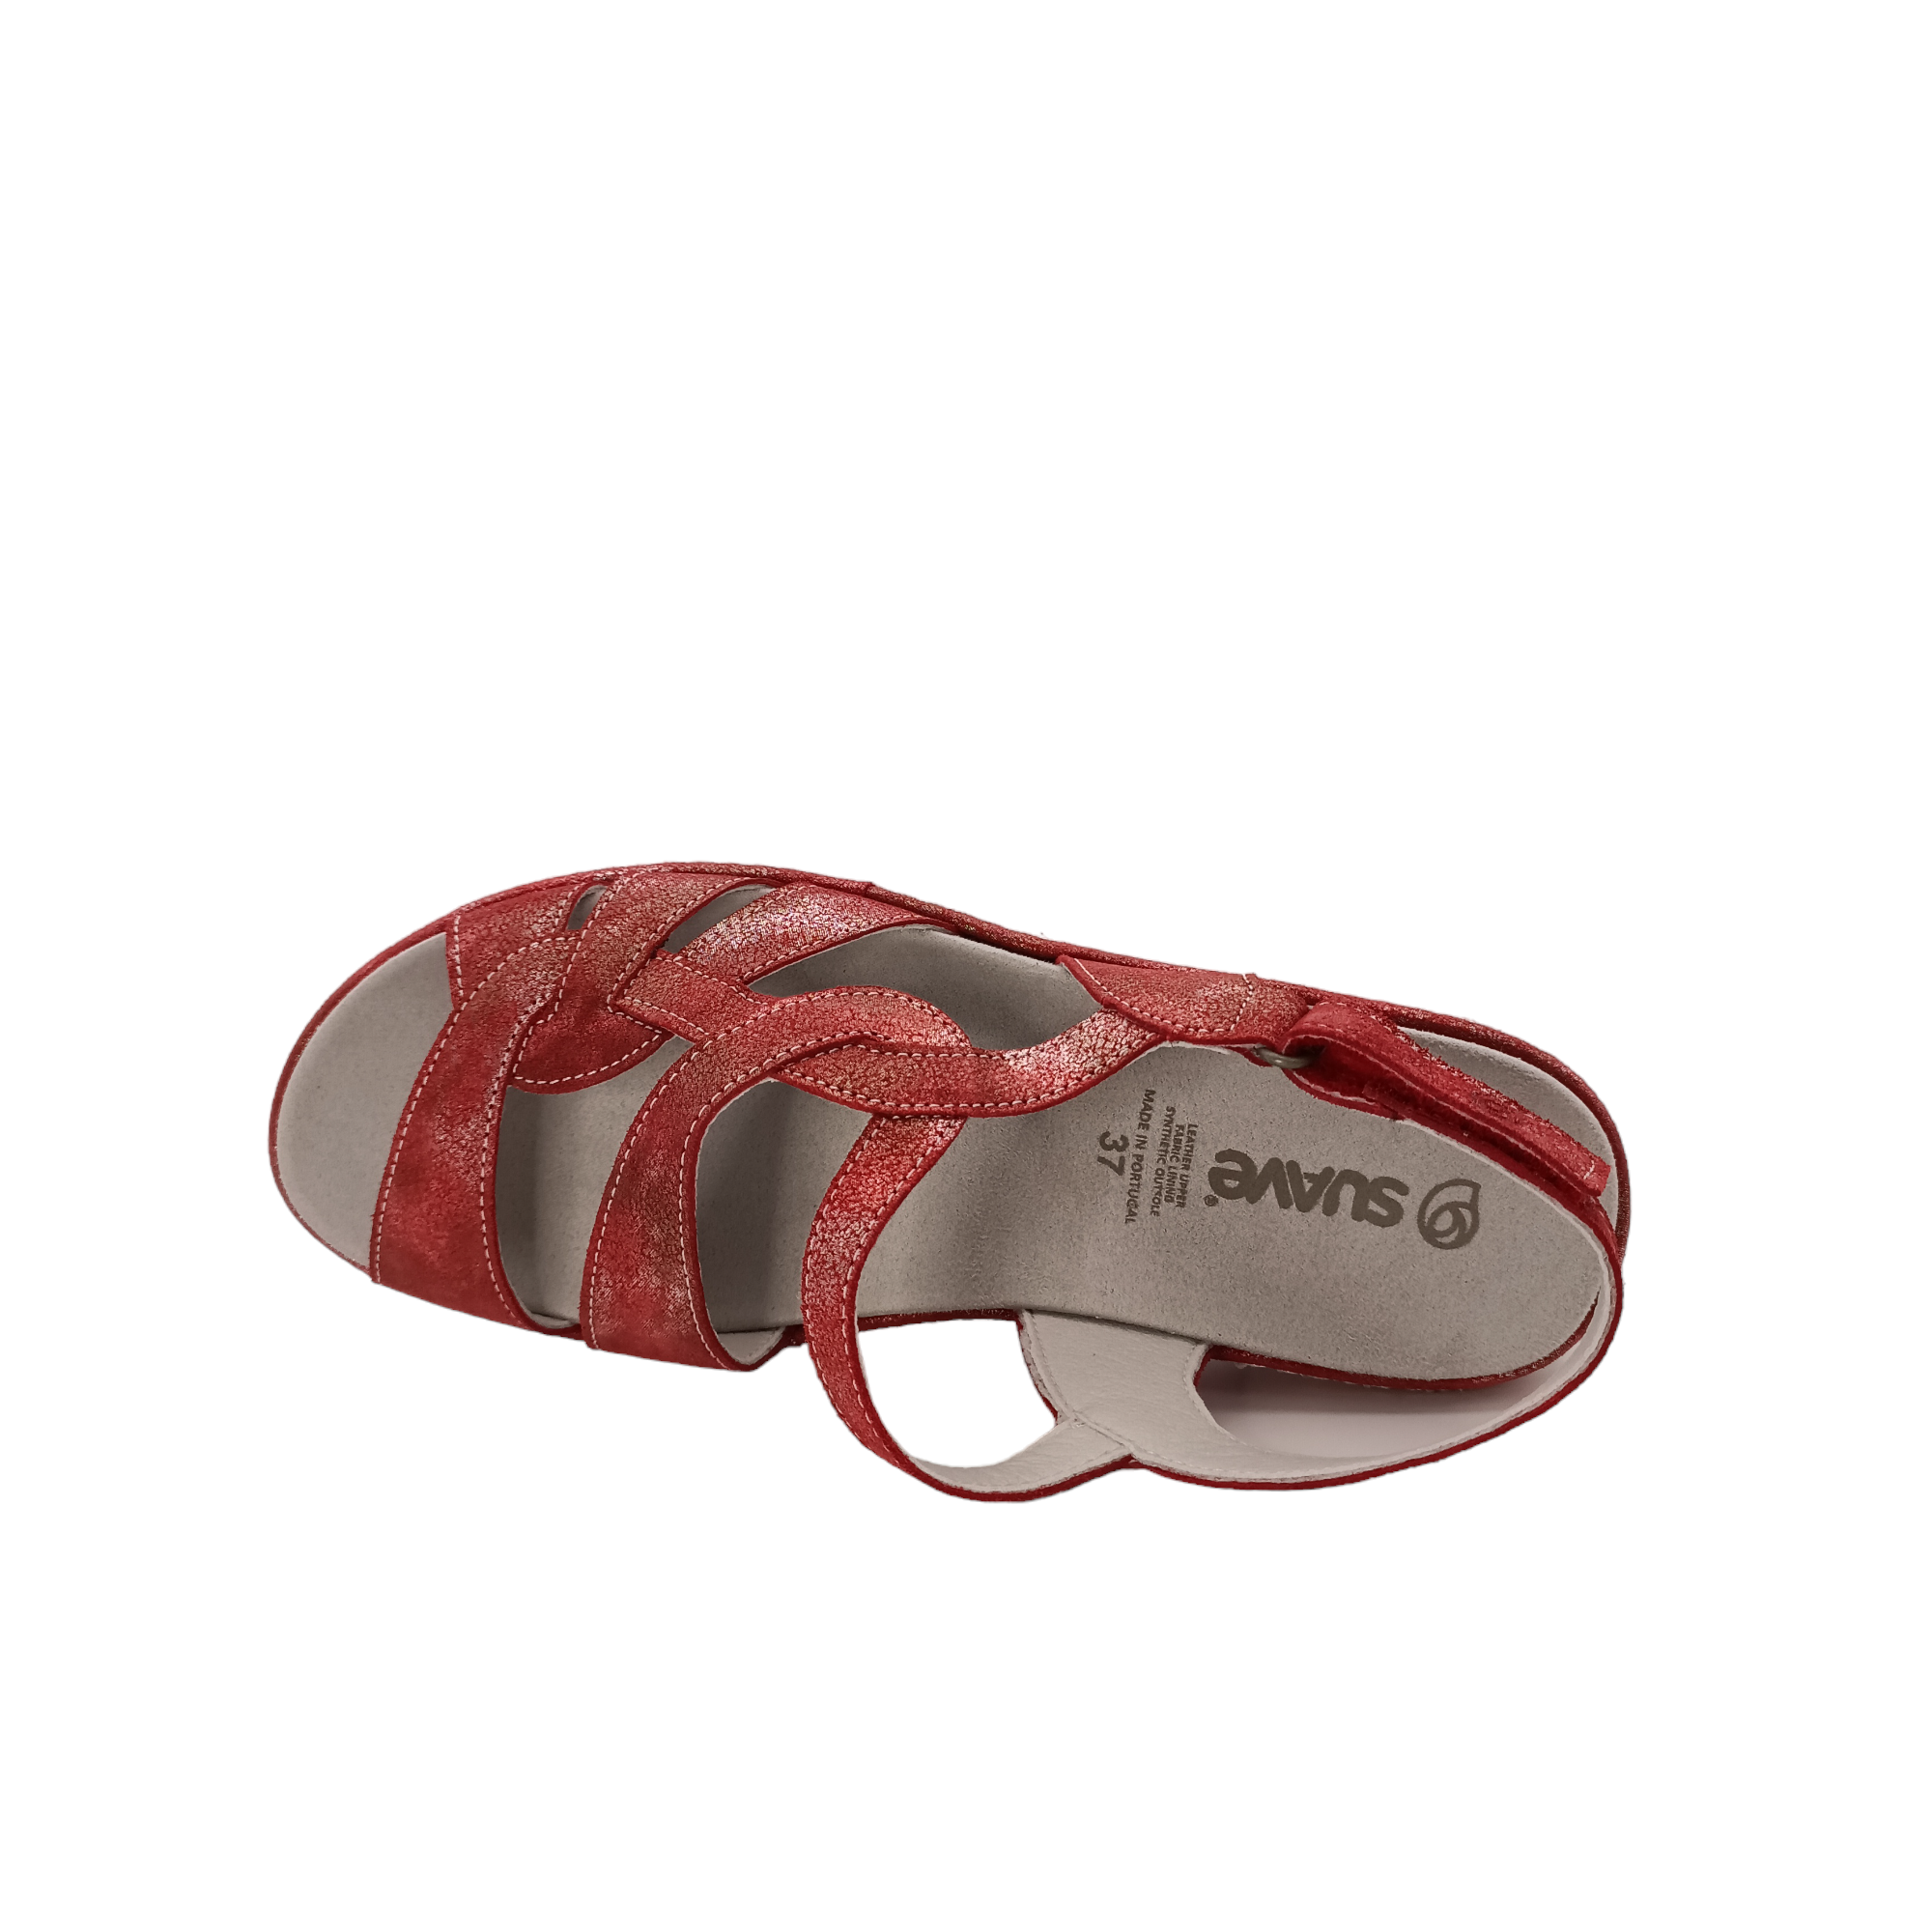 Elisa - shoe&amp;me - Suave - Sandal - Sandals, Summer, Womens